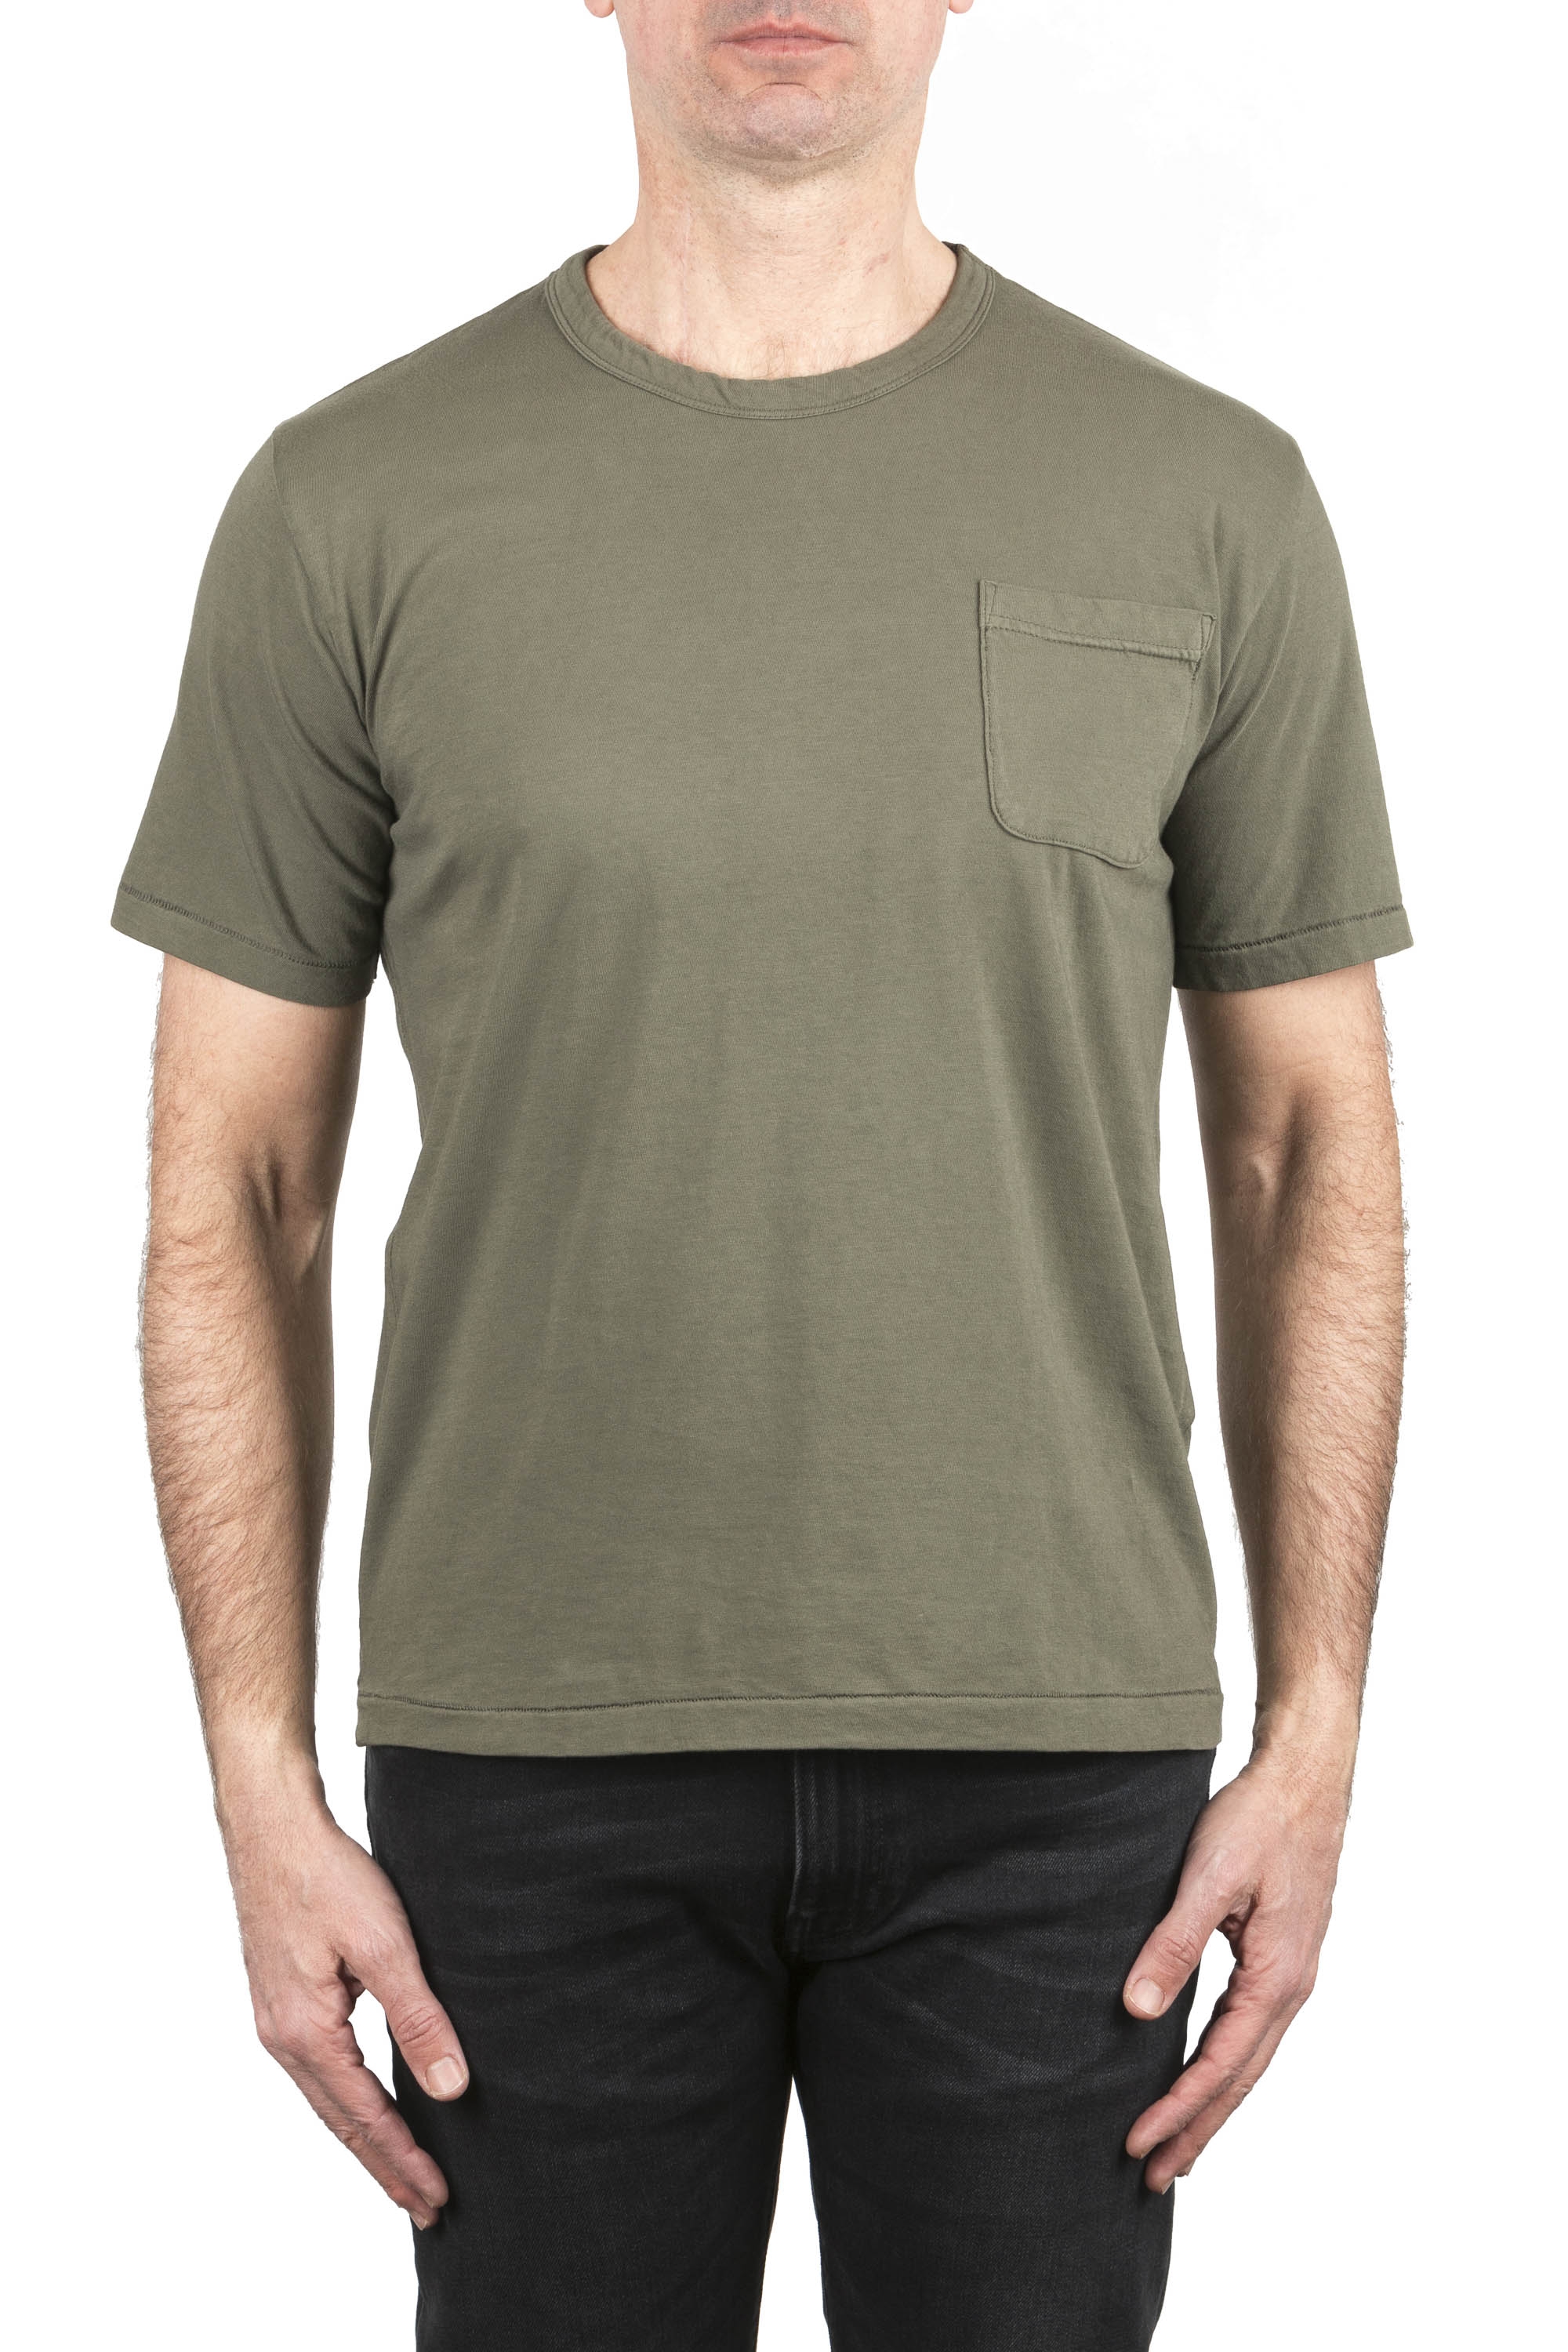 SBU 04650_23AW Round neck patch pocket cotton t-shirt green 01